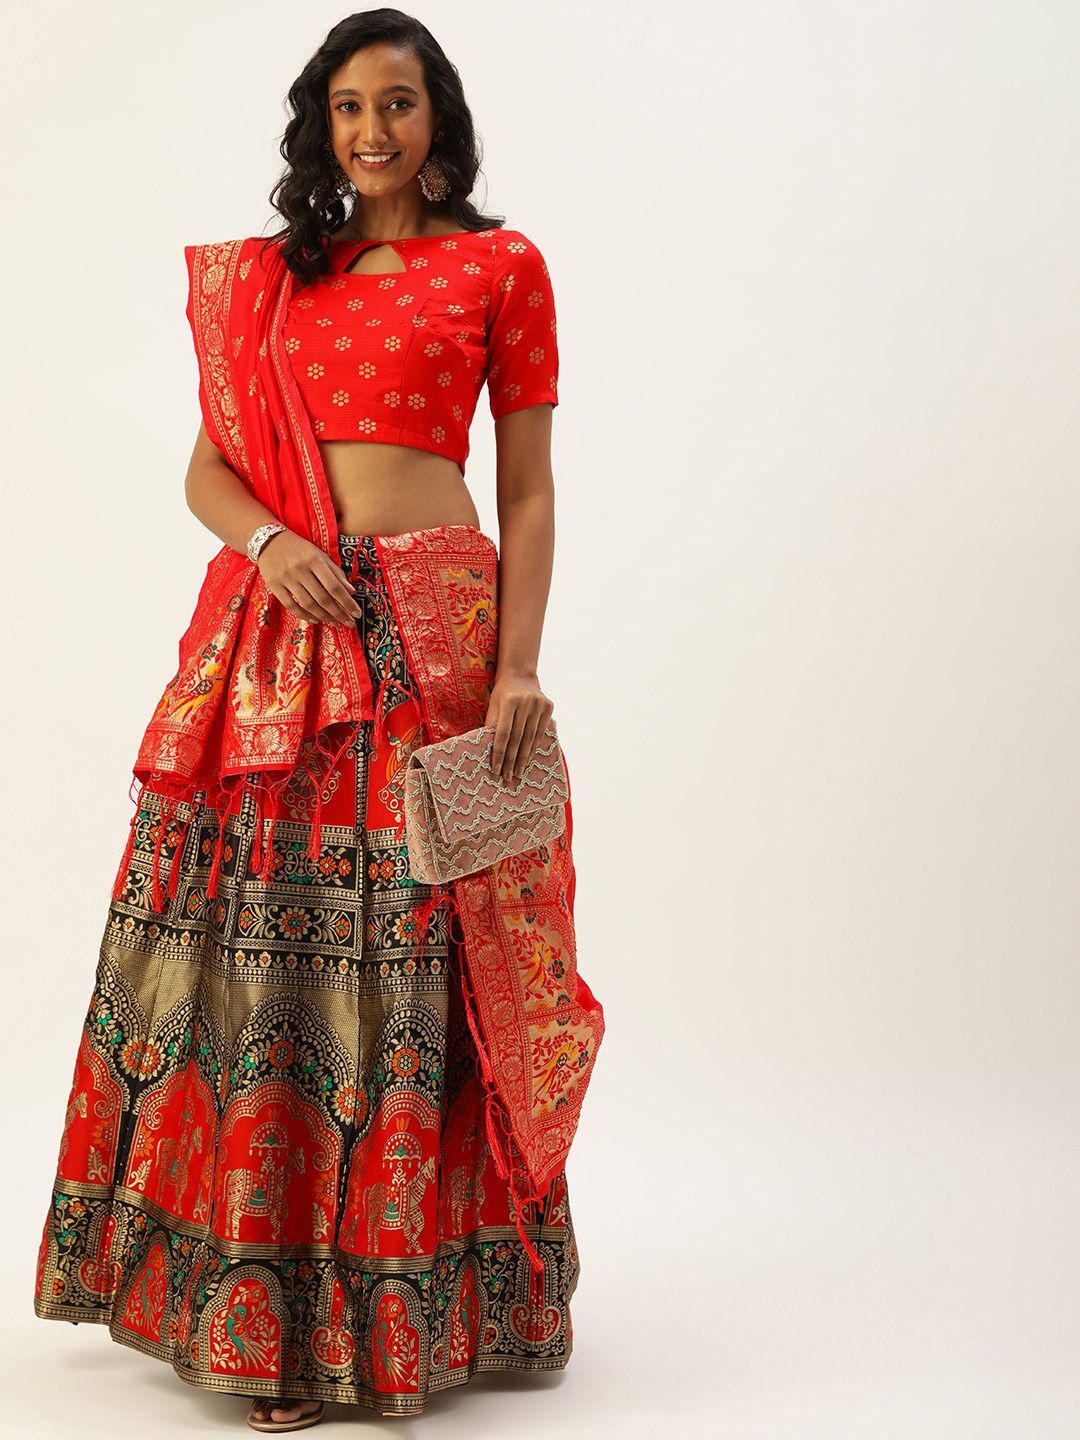 Pandadi Saree Black & Red Semi-Stitched Lehenga & Unstitched Blouse With Dupatta Price in India